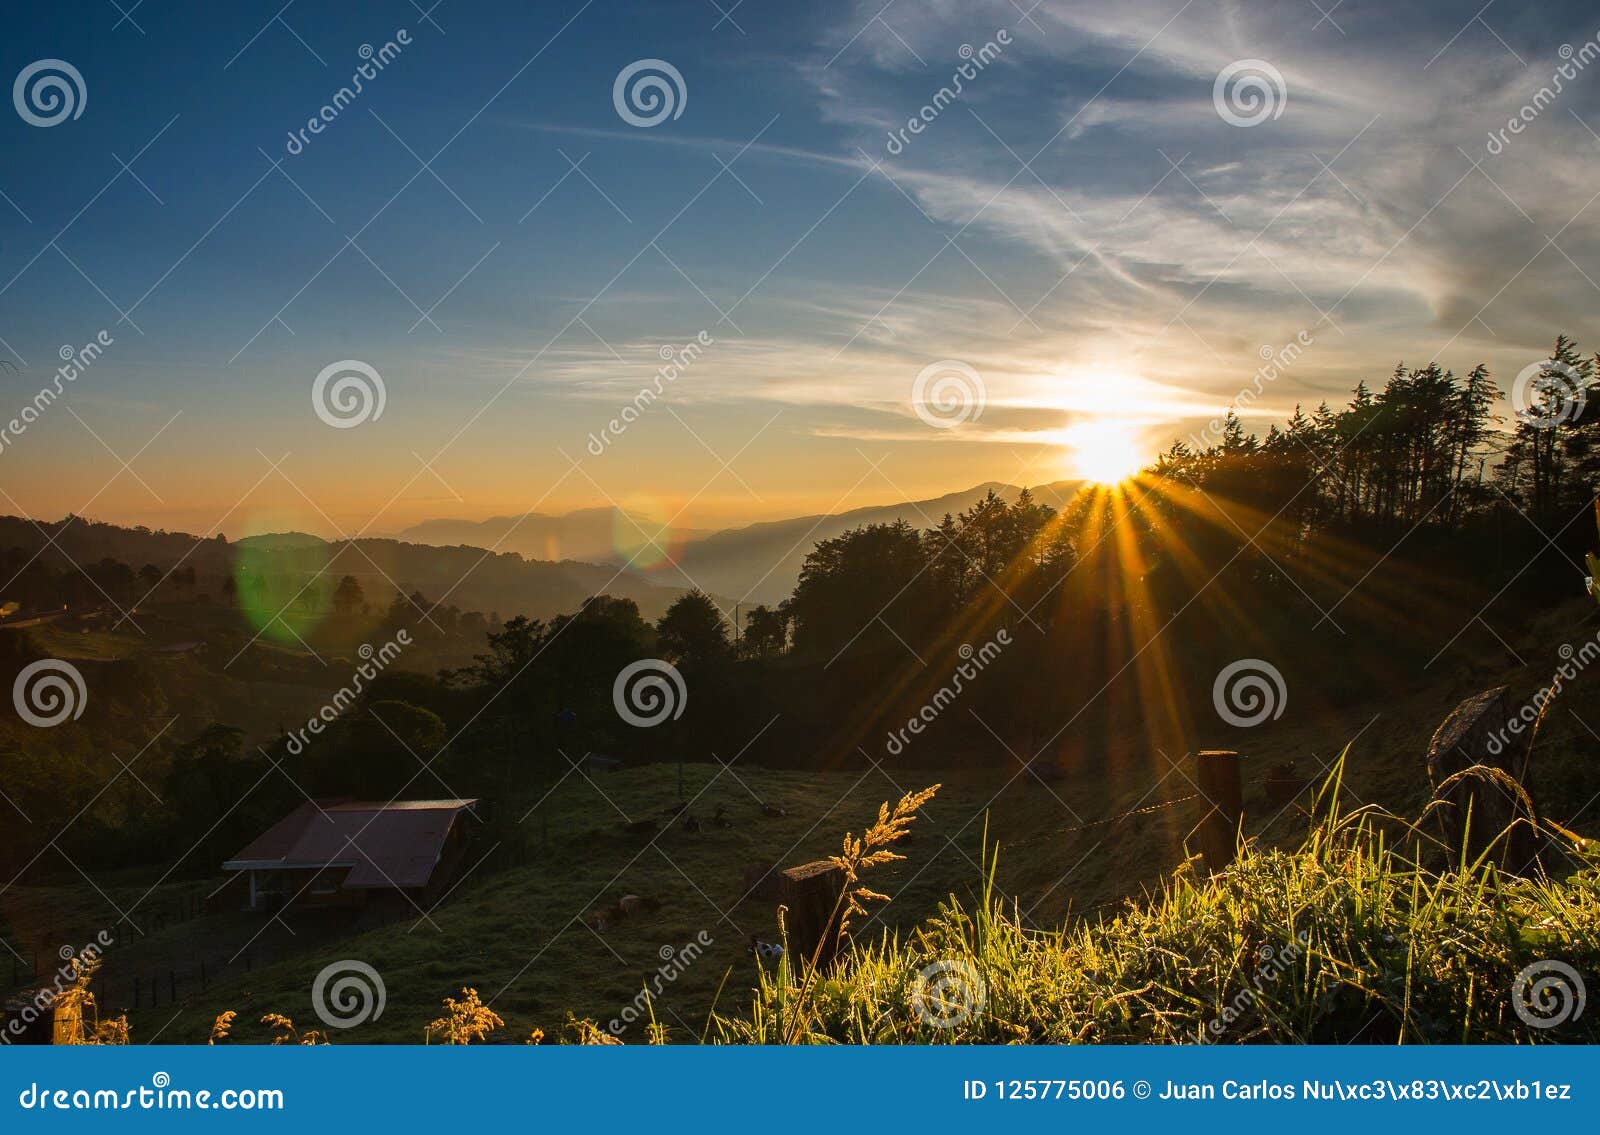 sunrise landscape at the hills